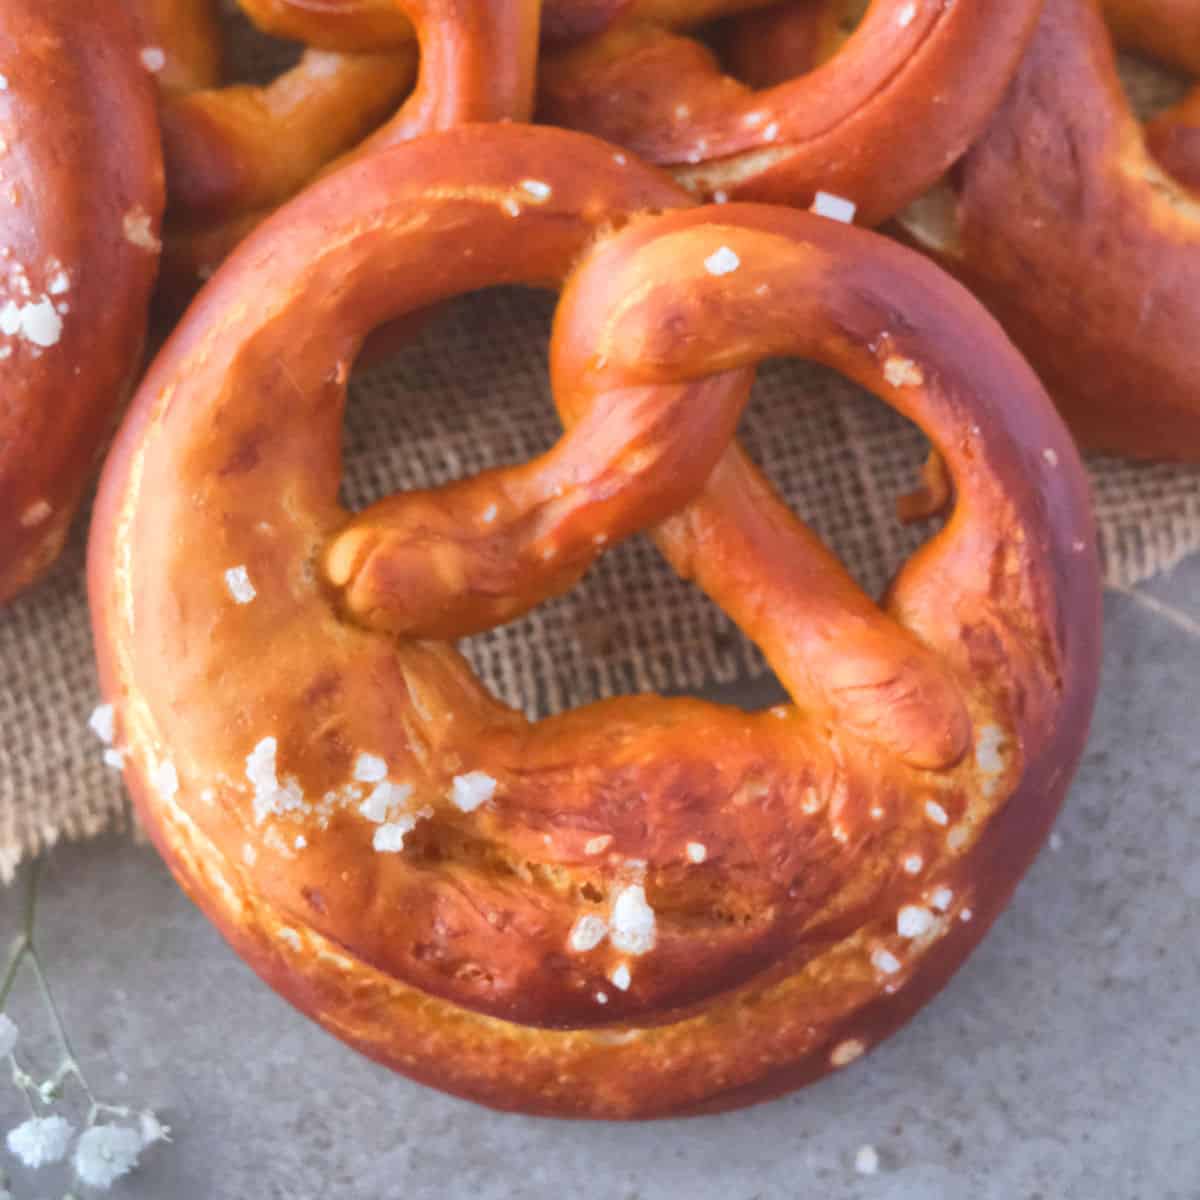 Homemade big German pretzels stacked together with coarse sea salt on top. 